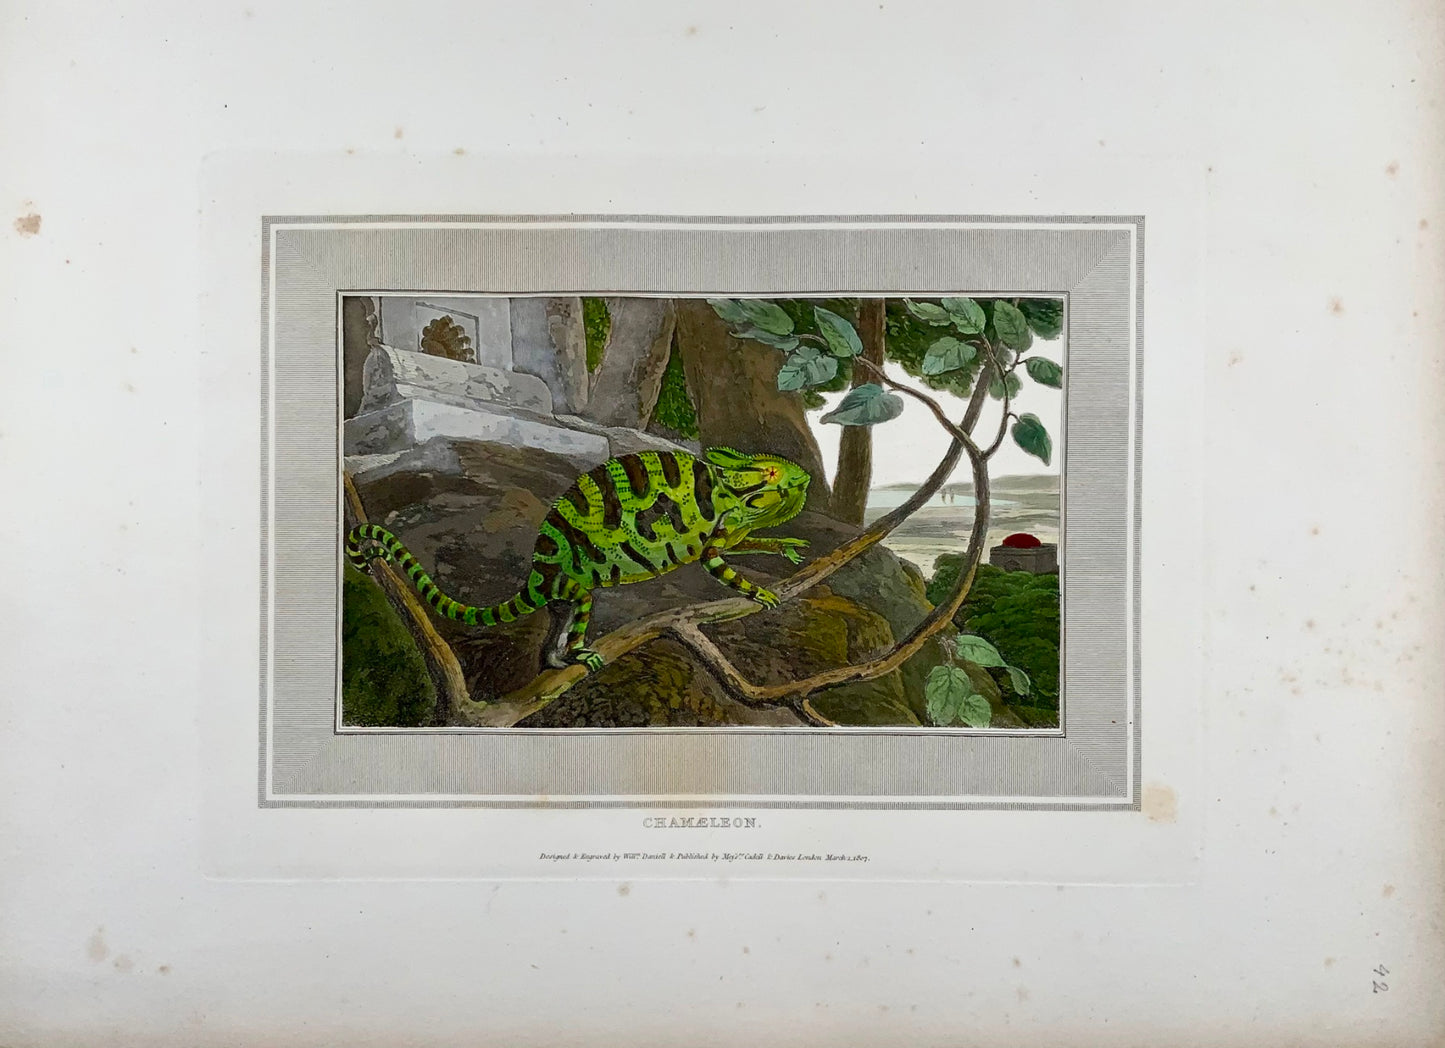 1807 William Daniell, Chamelon, Reptile, hand coloured aquatint